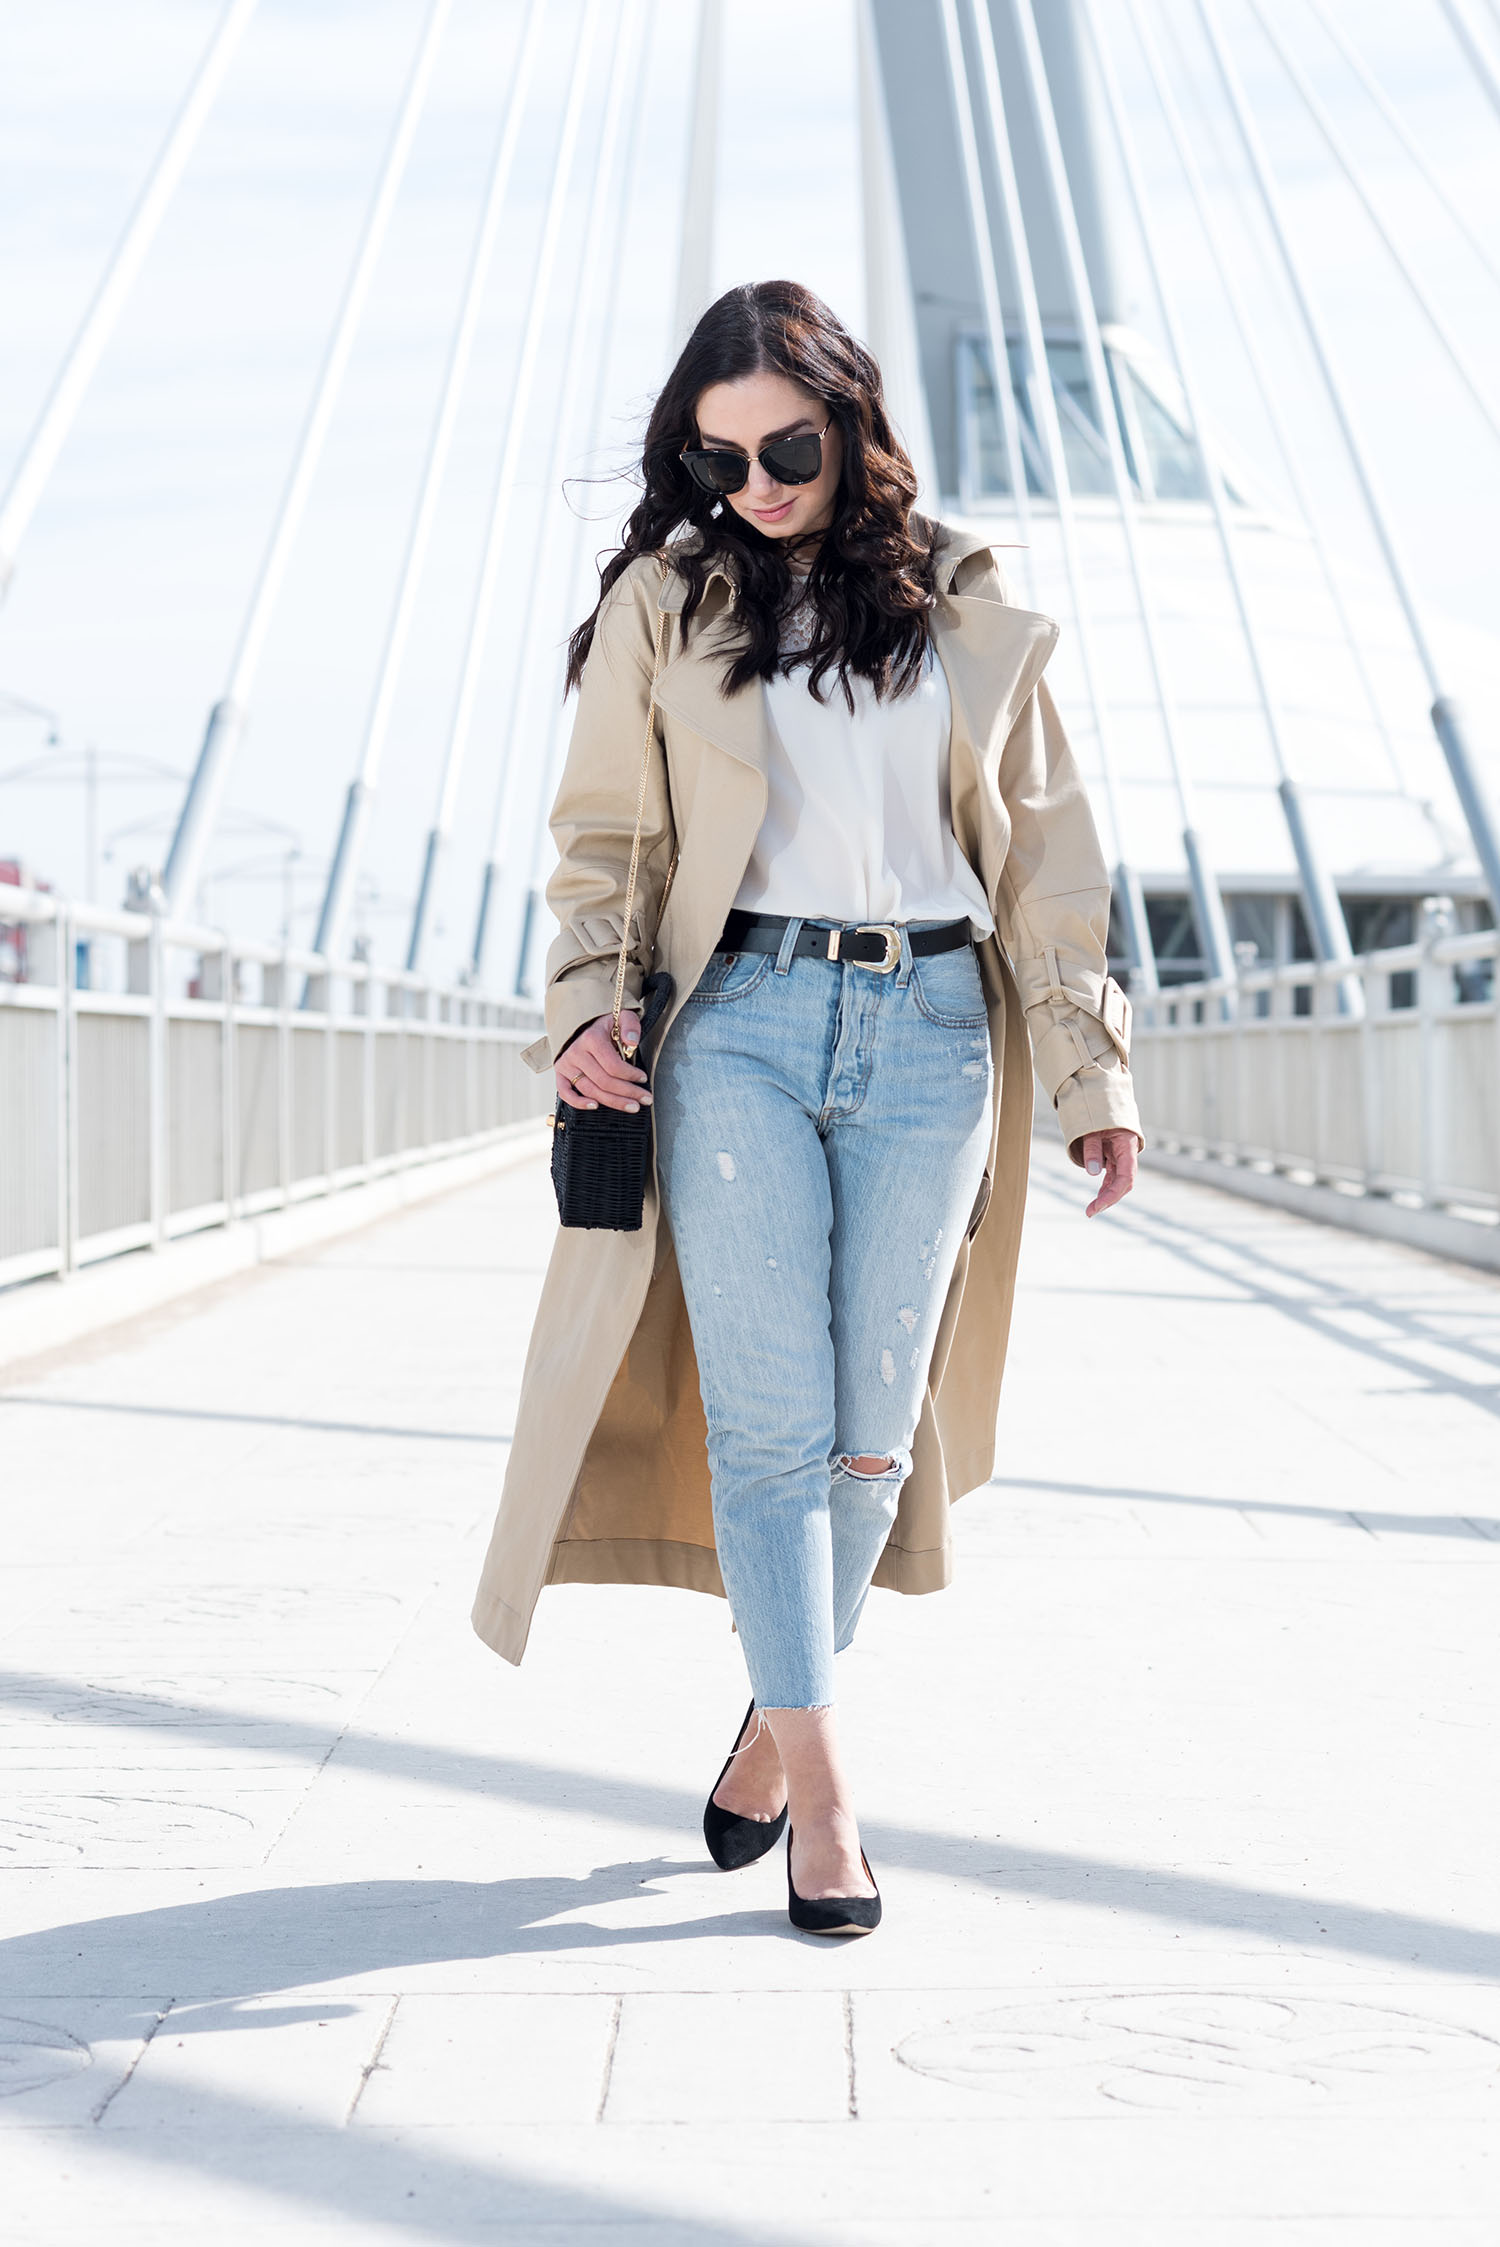 Winnipeg fashion blogger Cee Fardoe of Coco & Vera walks on Louis Riel bridge wearing an H&M trench coat and Levi's 501 skinny jeans